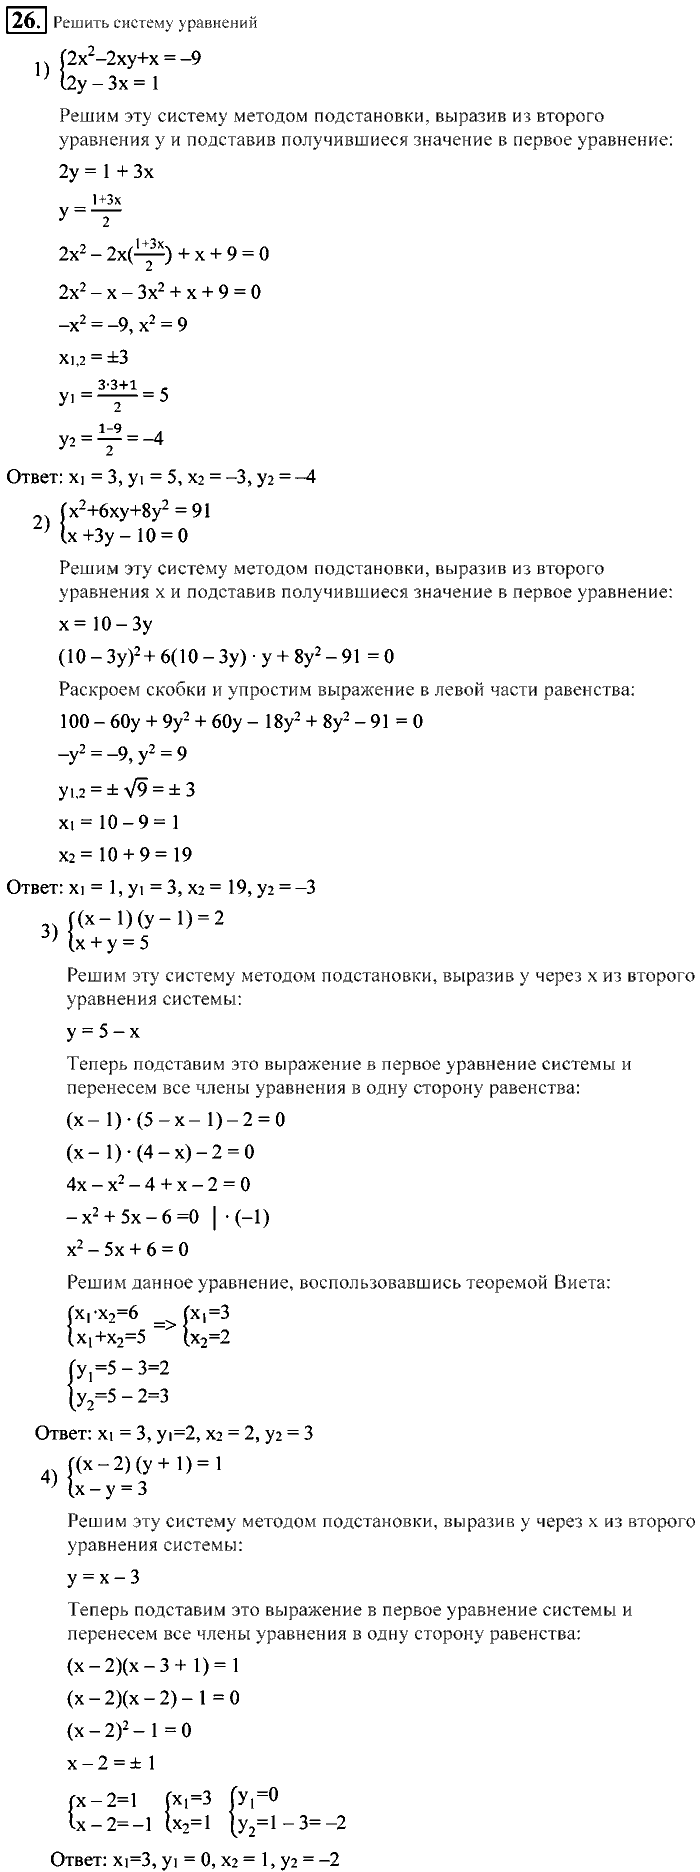 Алгебра, 9 класс, Алимов, Колягин, 2001, ------ Задание: 26